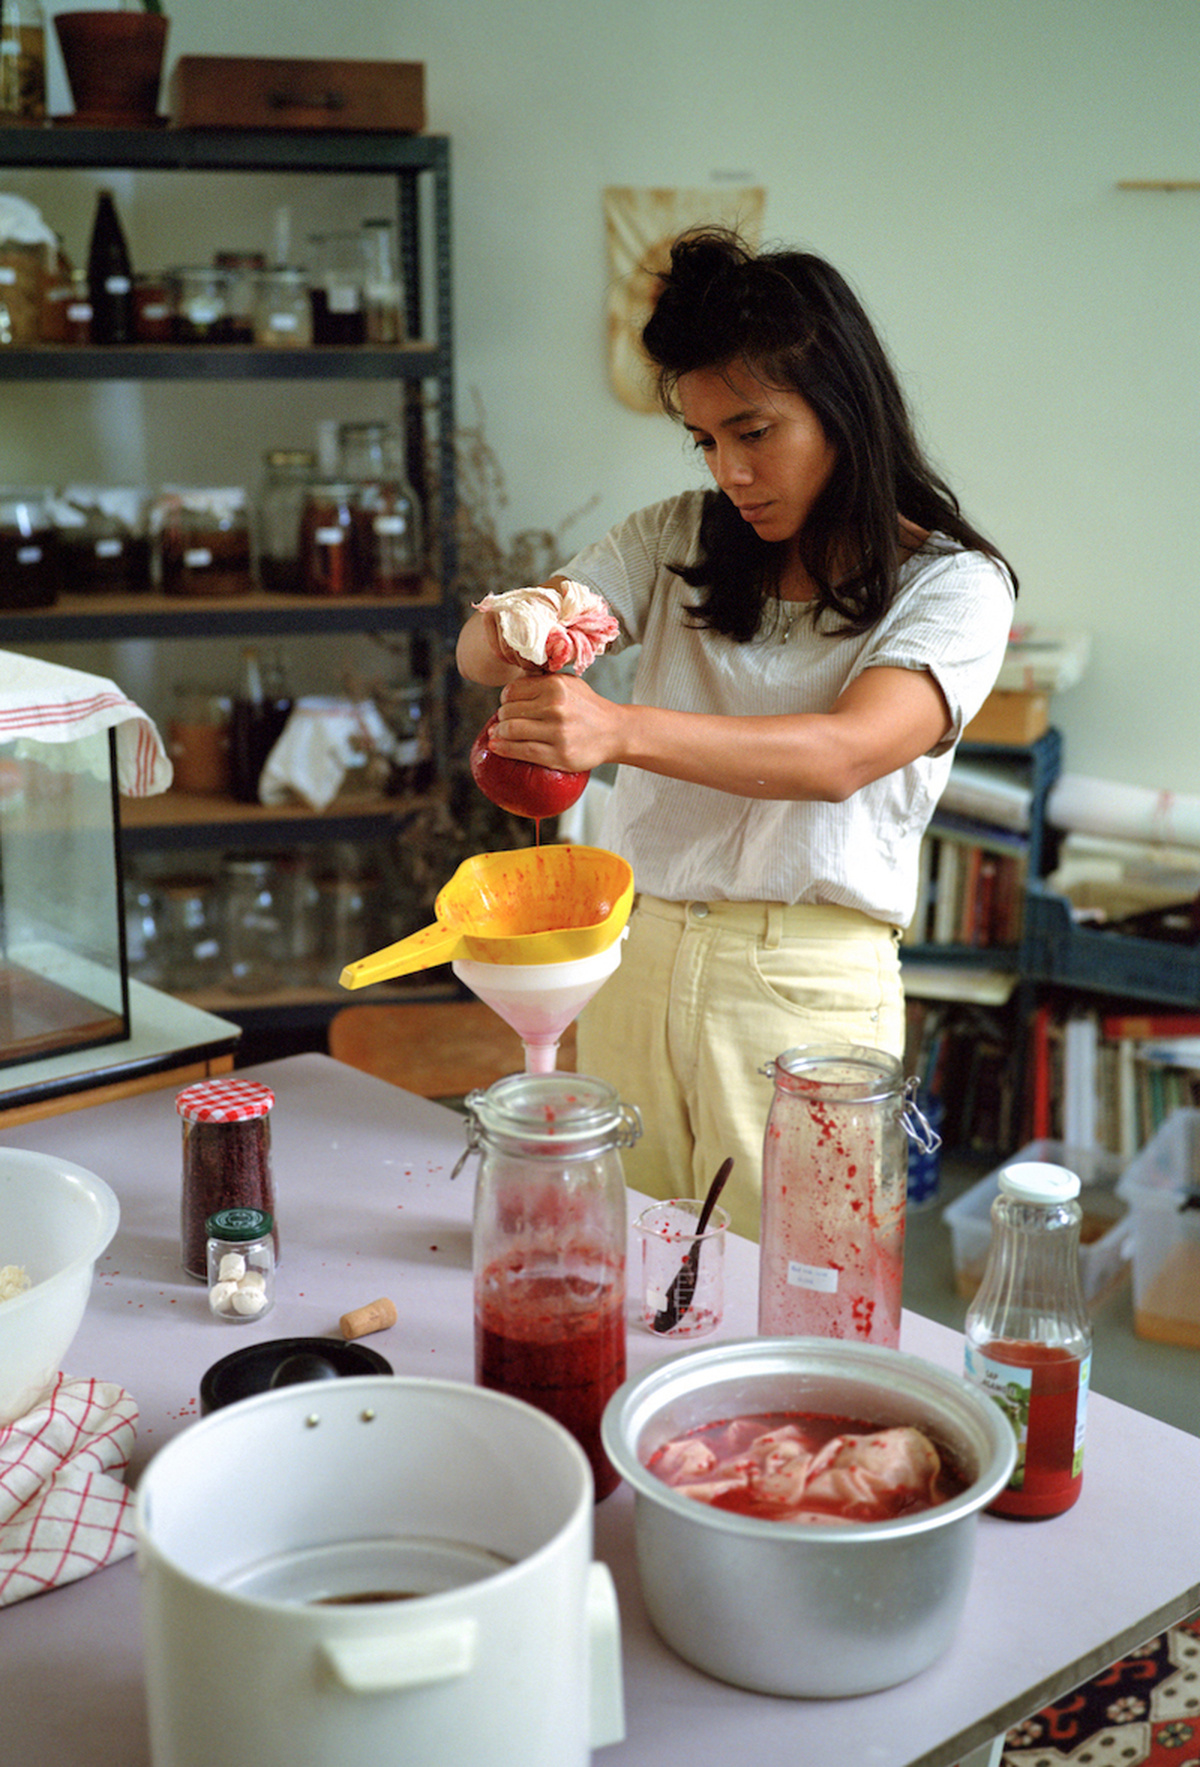 Asli Hatipoglu prepares jam in their kitchen.